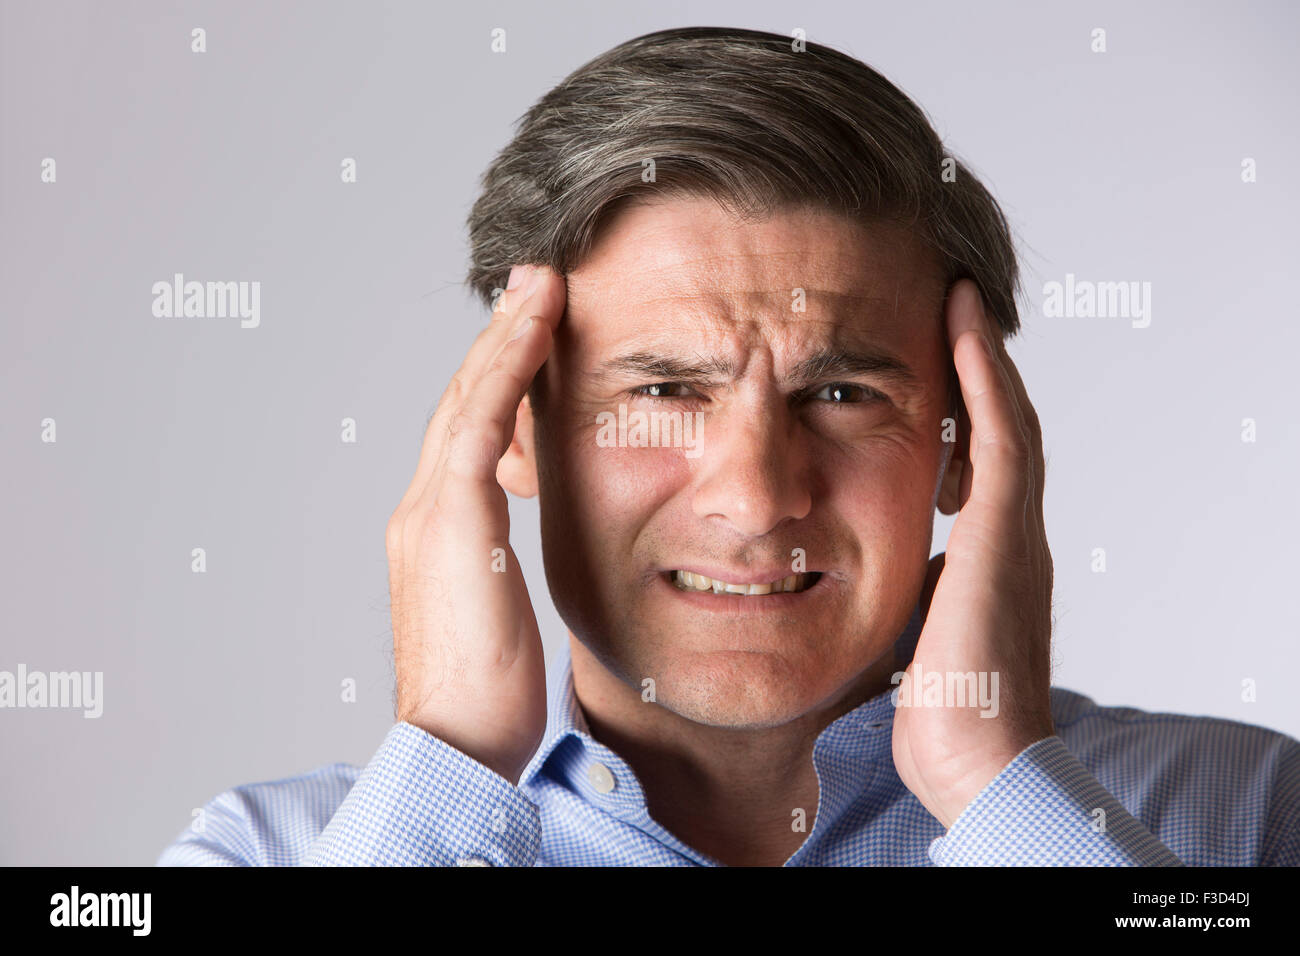 Studio Portrait Of Man Suffering With Headache Stock Photo